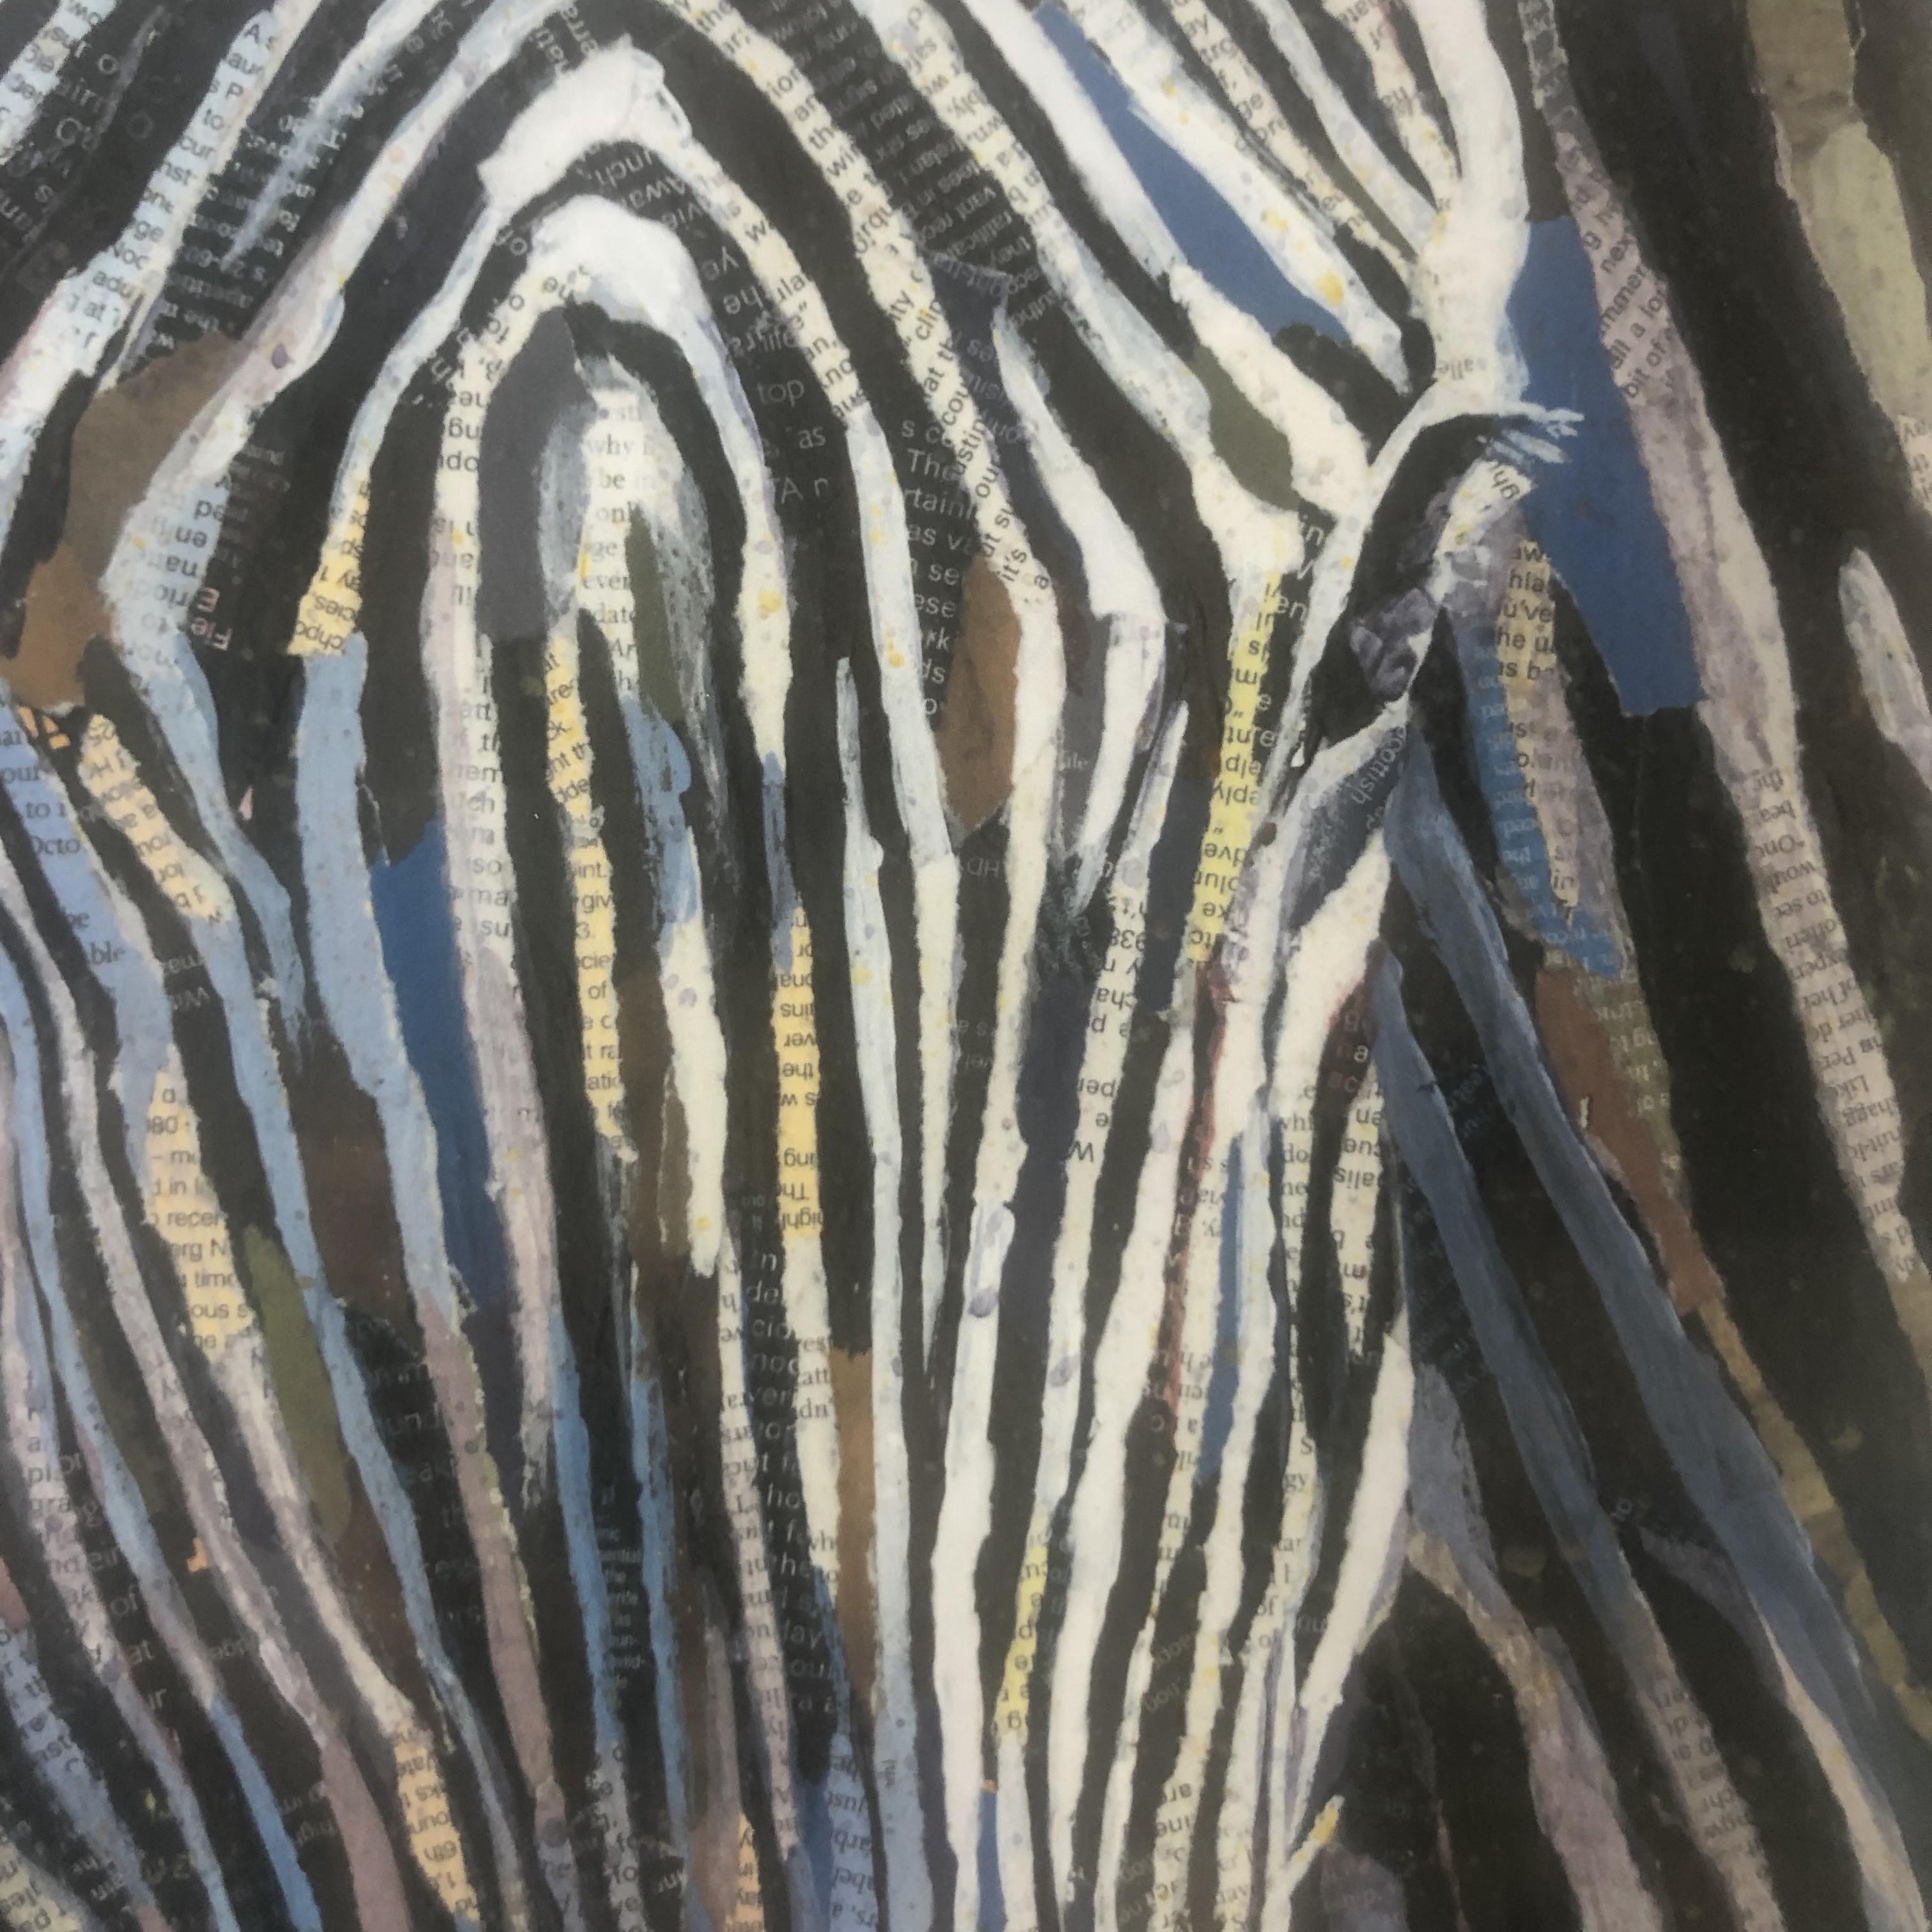 Merging Lines, Limited edition print, Animal print, Zebra, Wild life  - Print by Paul Bartlett